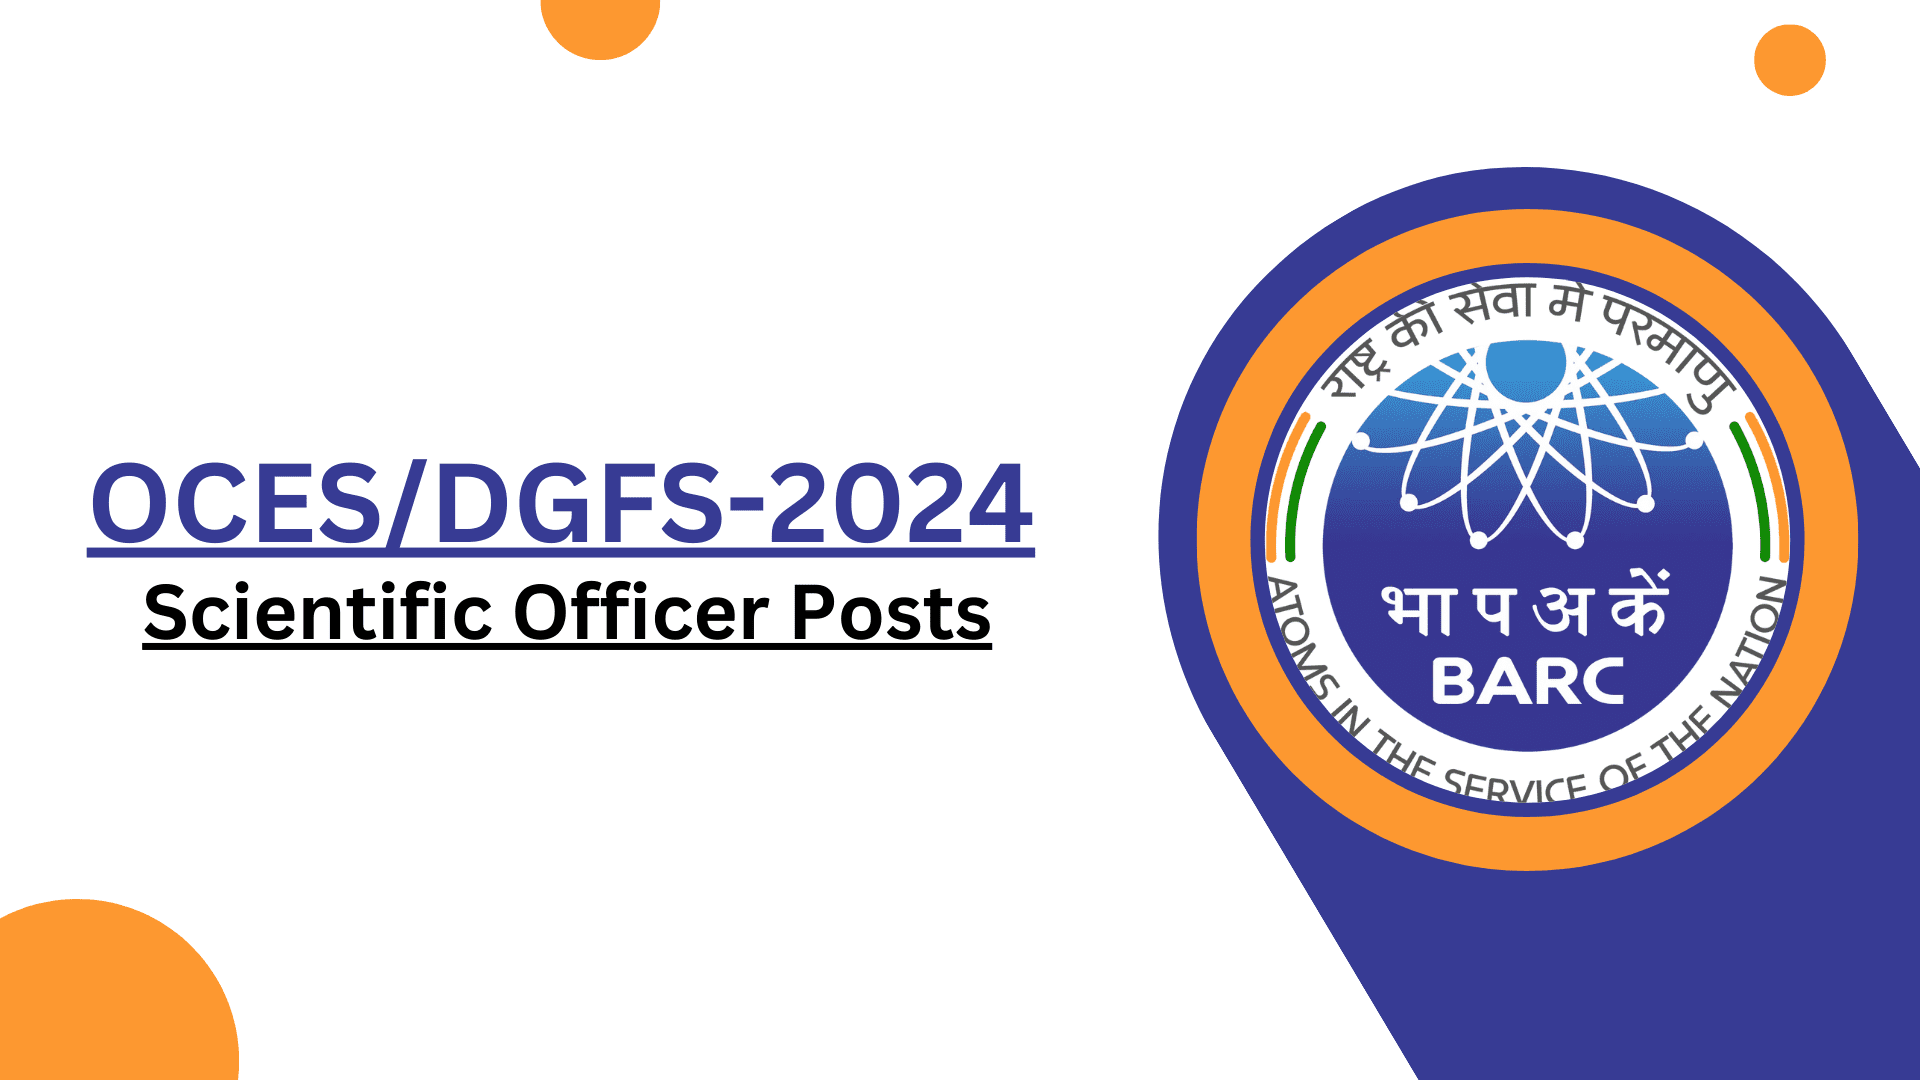 BARC Scientific Officers Recruitment 2024 OCES/DGFS2024, Admit Card